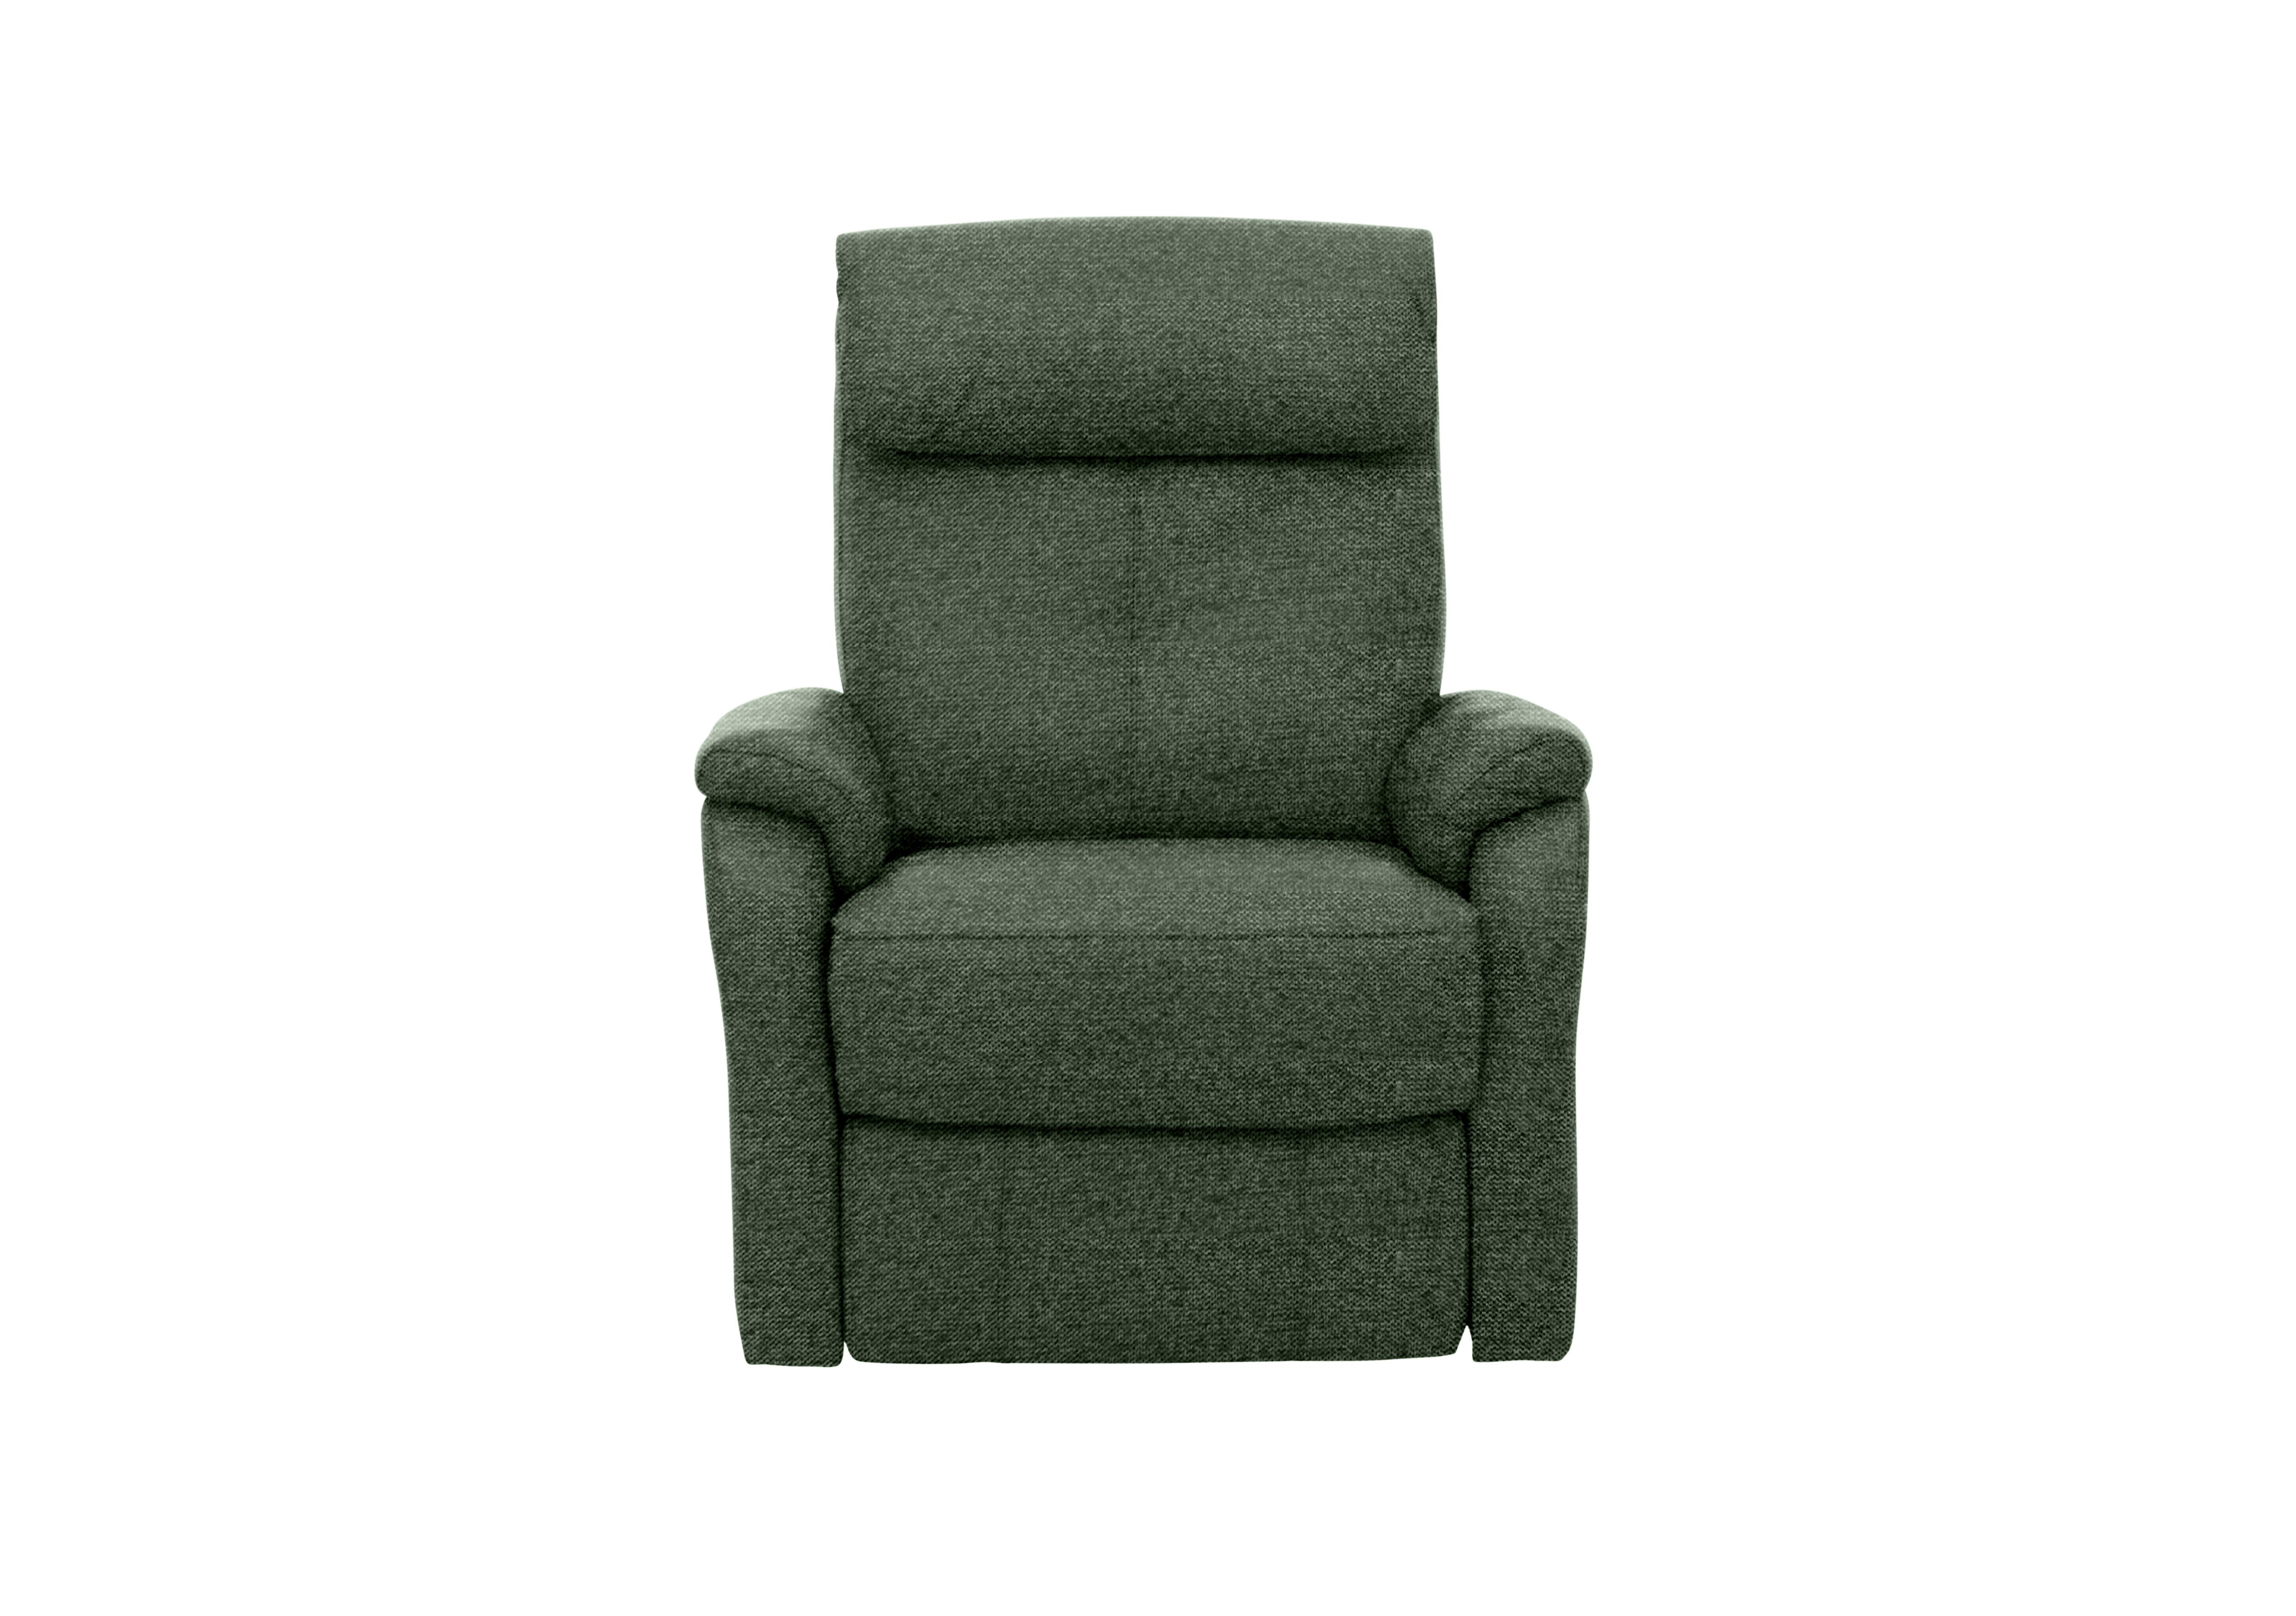 Rowan Fabric Swivel Rocker Recliner Armchair in Fab-Ska-R48 Moss Green on Furniture Village